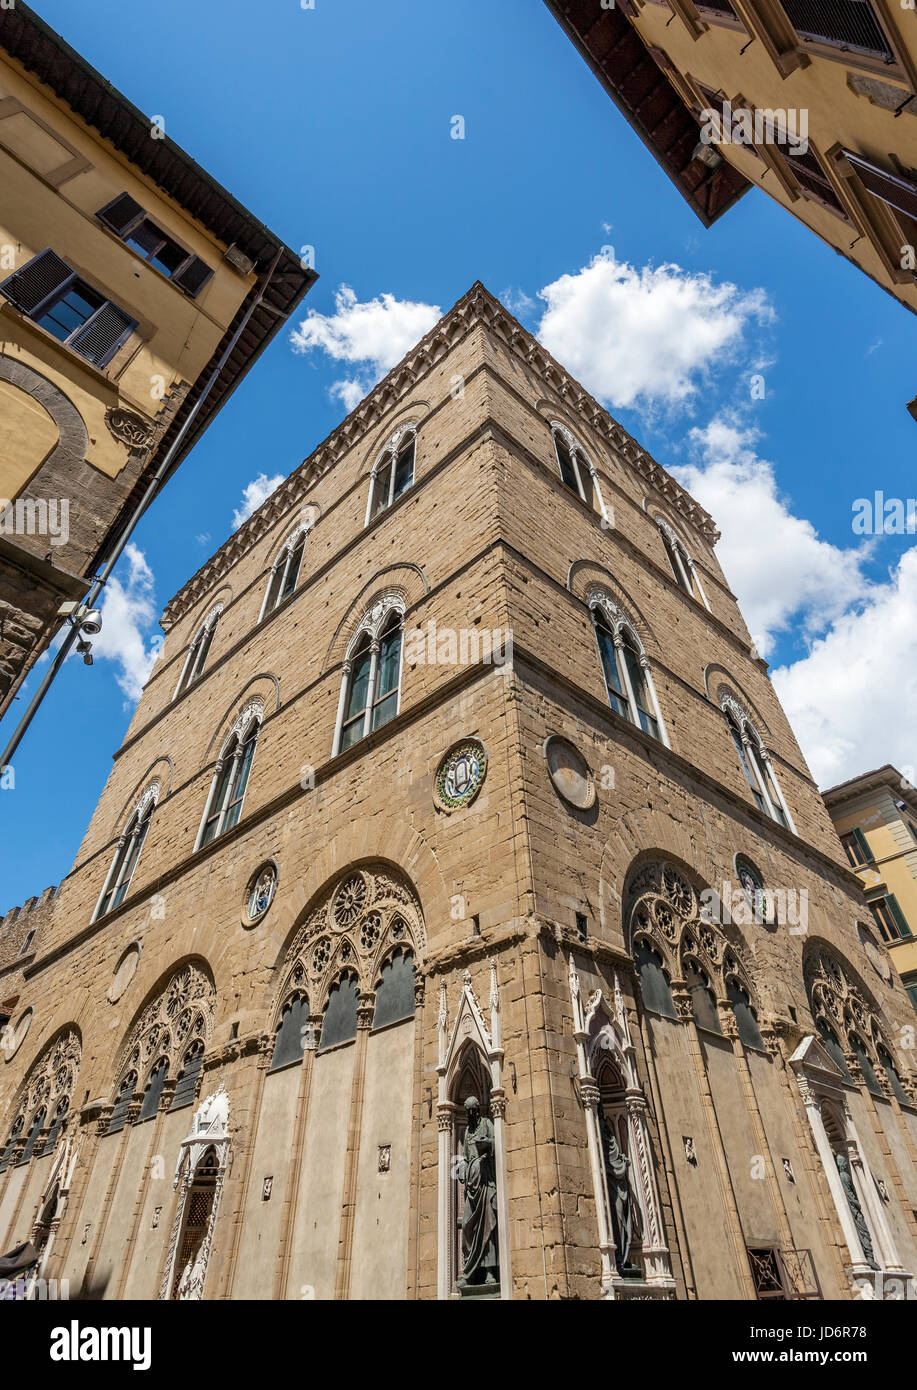 Gotica Chiesa di Orsanmichele - Via dei Calzaiuoli via Arte della Lana - Firenze (Firenze), Toscana, Italia, Europa Foto Stock